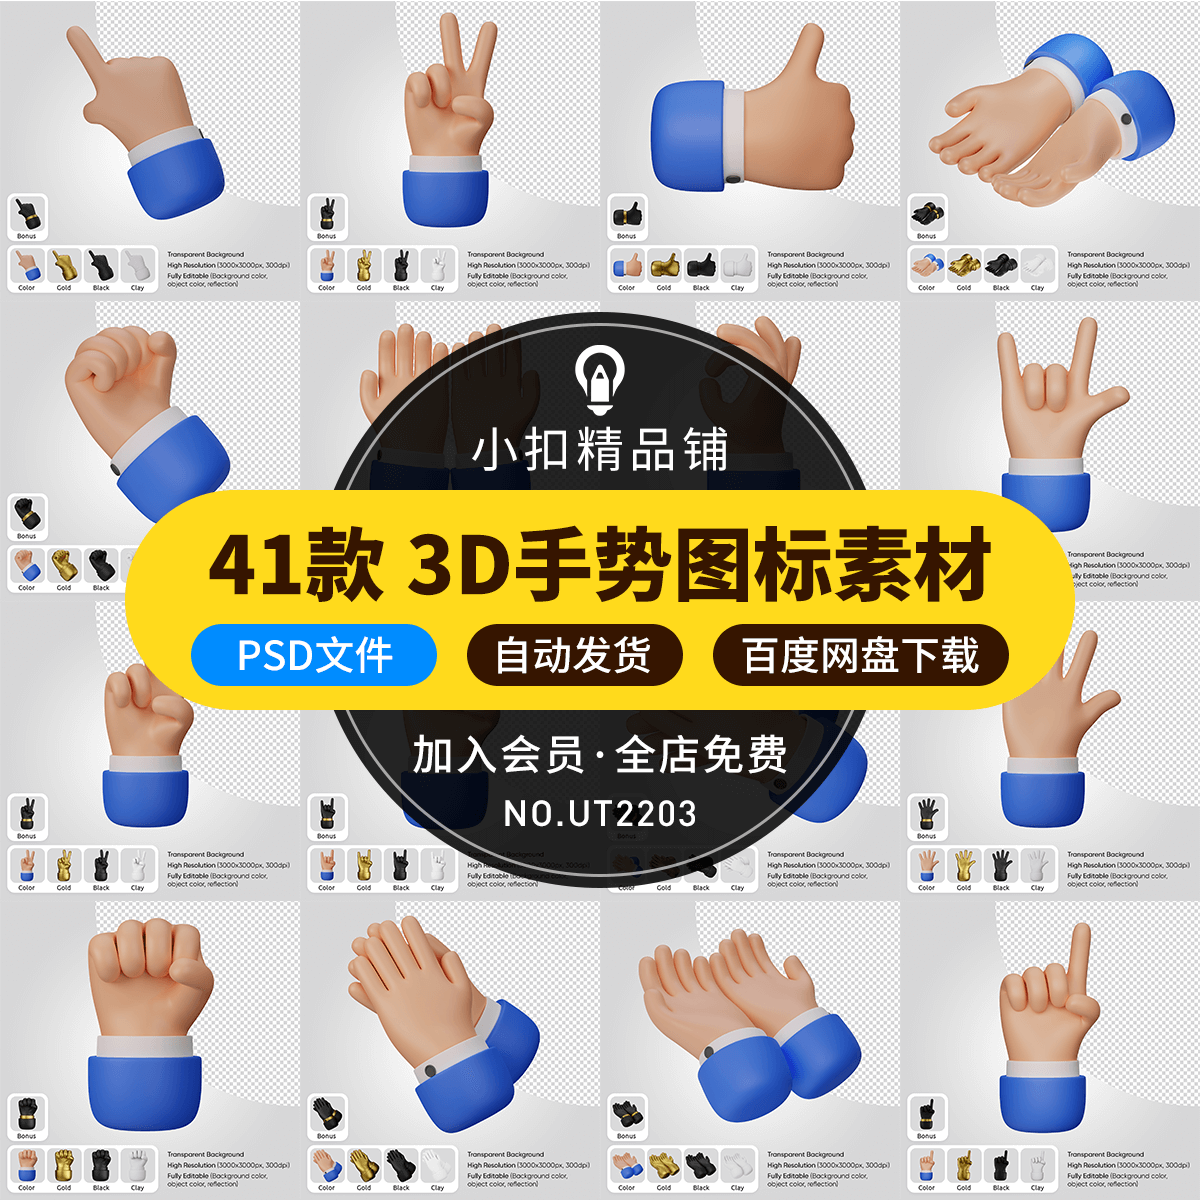 3D立体商务风交互手势手指点赞点击握手比心图标设计png免扣素材